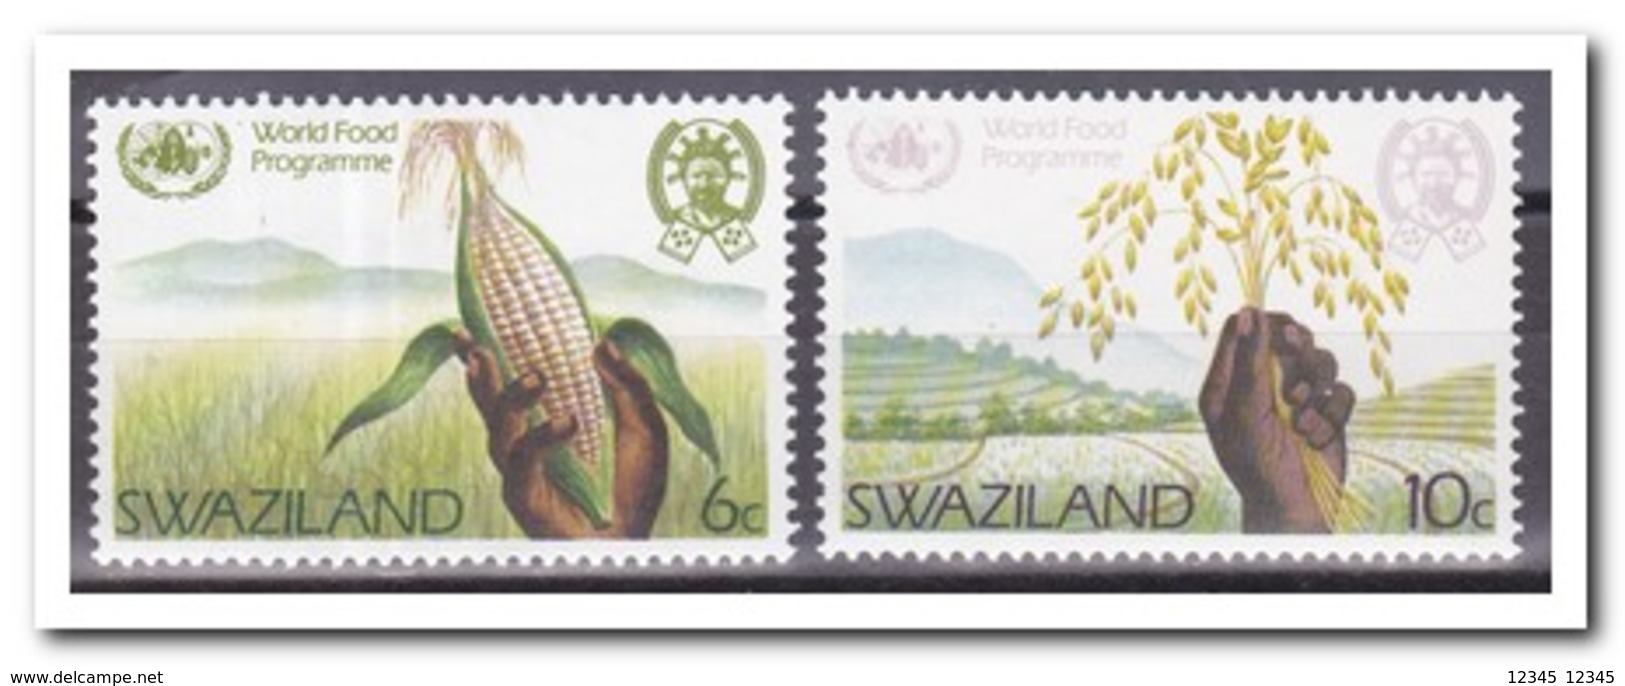 Swaziland 1983, Postfris MNH, Plants, Food - Swaziland (1968-...)